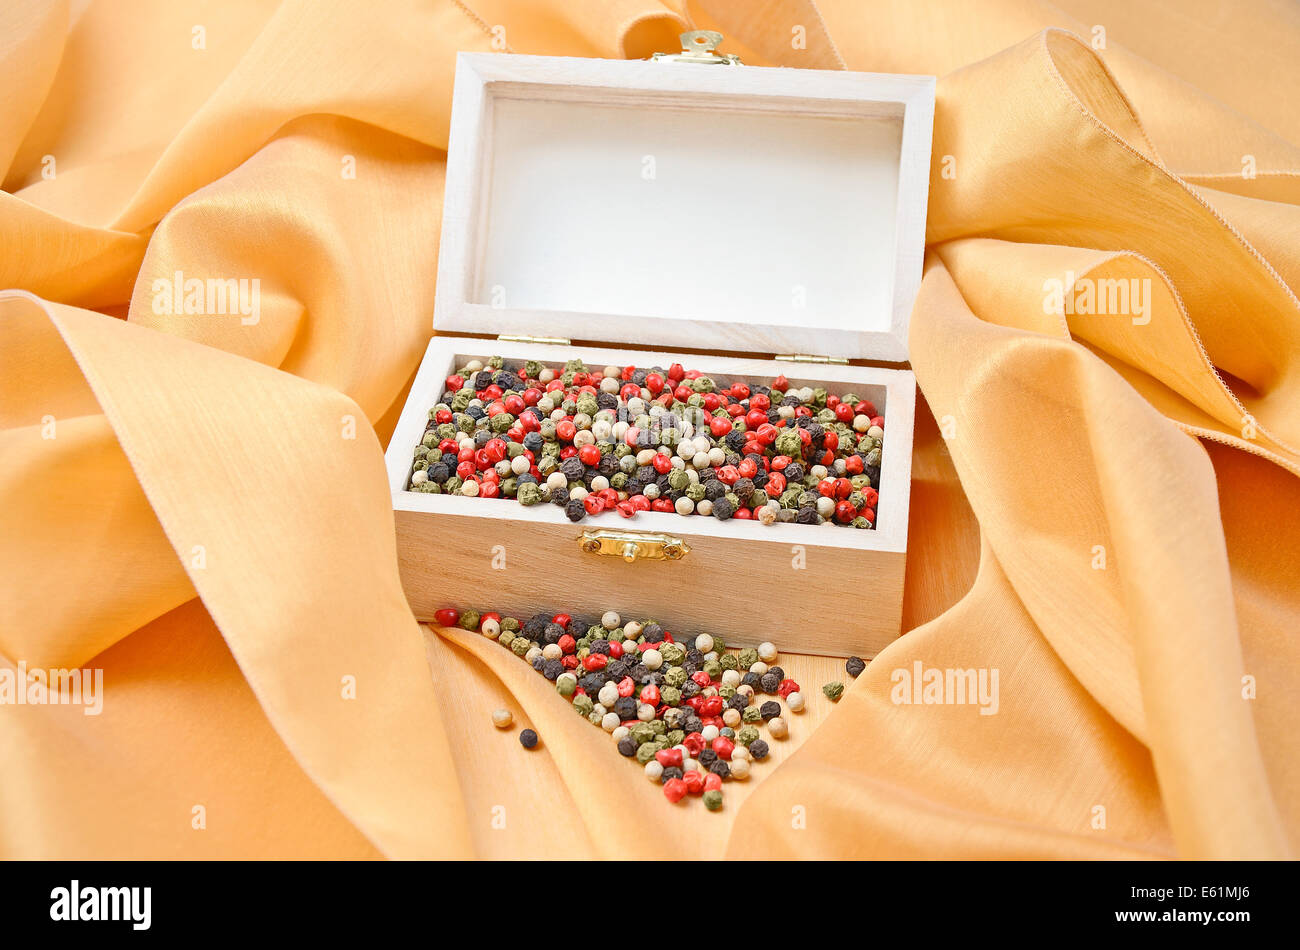 Pepper Treasure - Mixed dried peppercorns in a wooden box on cream colored silk. Stock Photo